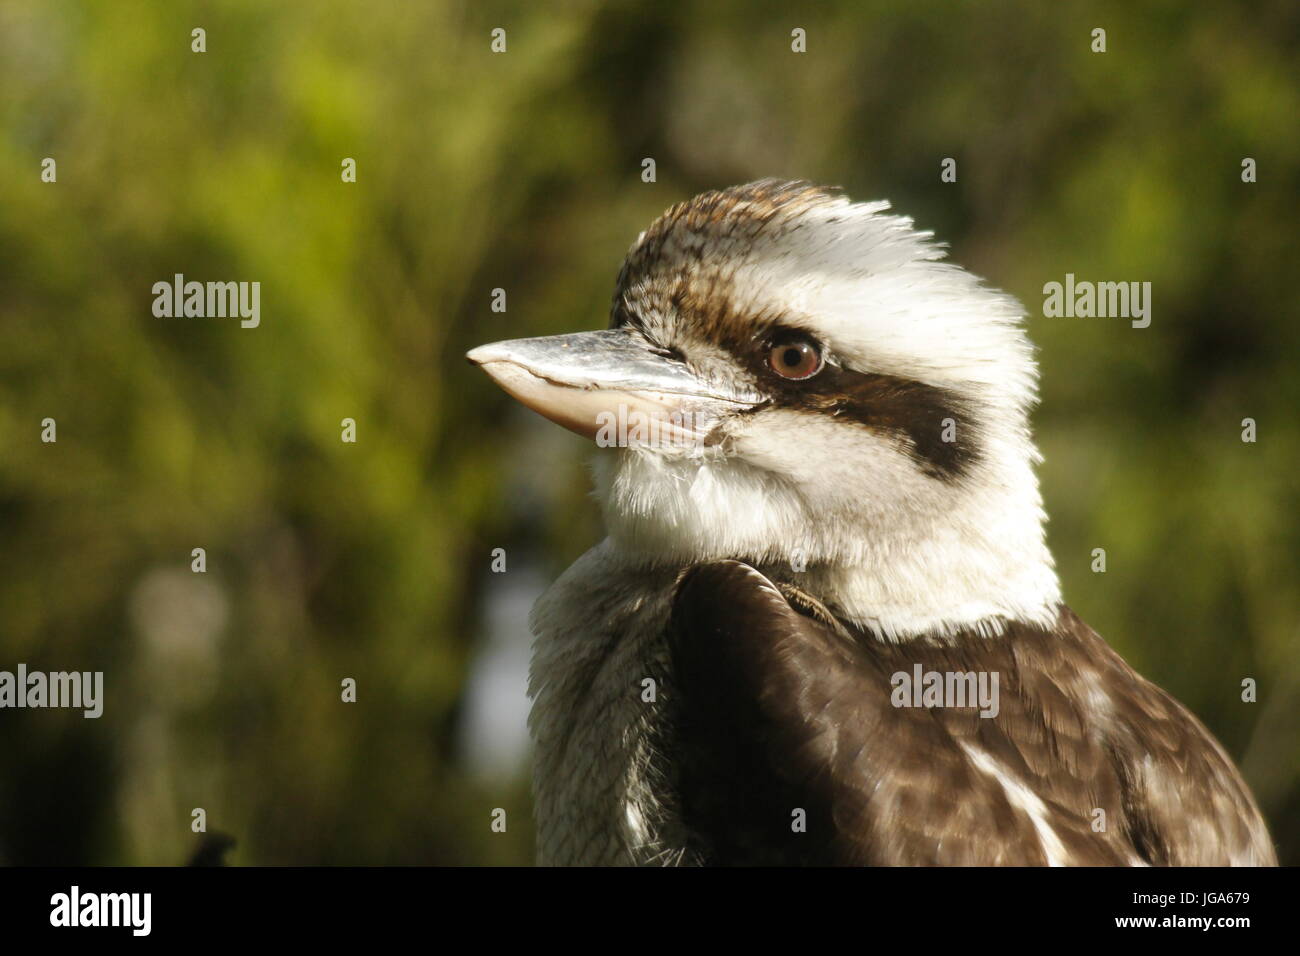 Porträt einer australischen Kookaburra, (Dacelo novaeguineae), Nahaufnahme links. Stockfoto